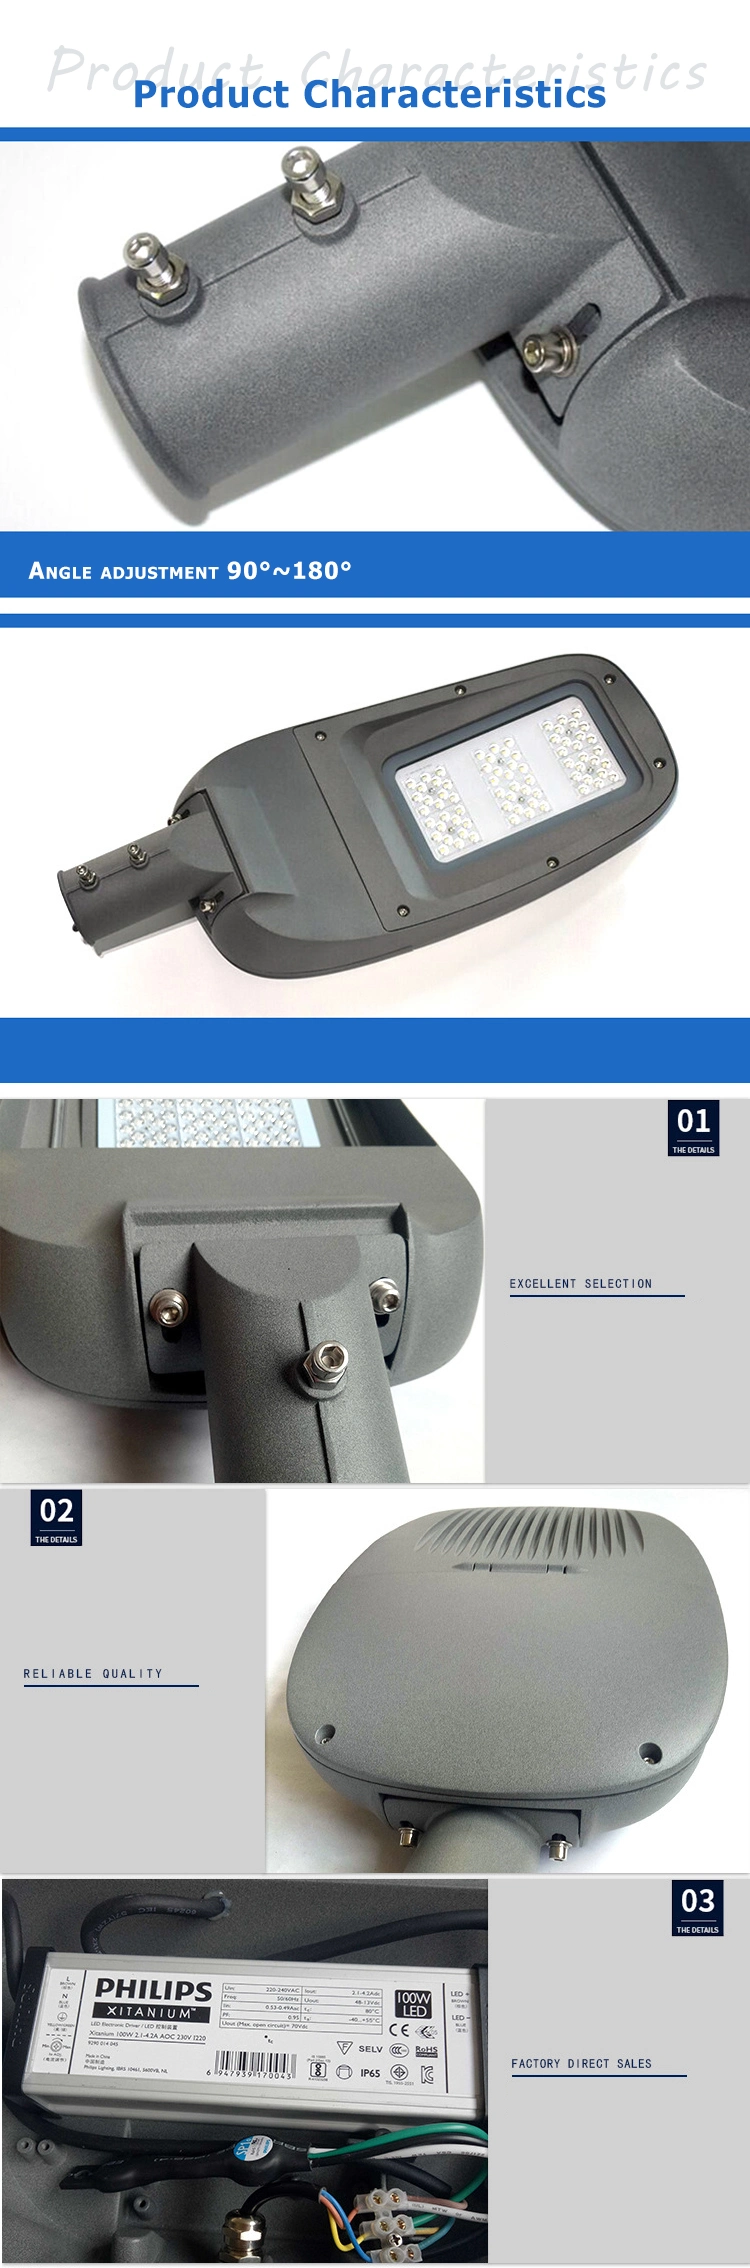 Hpzm New LED Street Light/SMD 3030 with Warranty